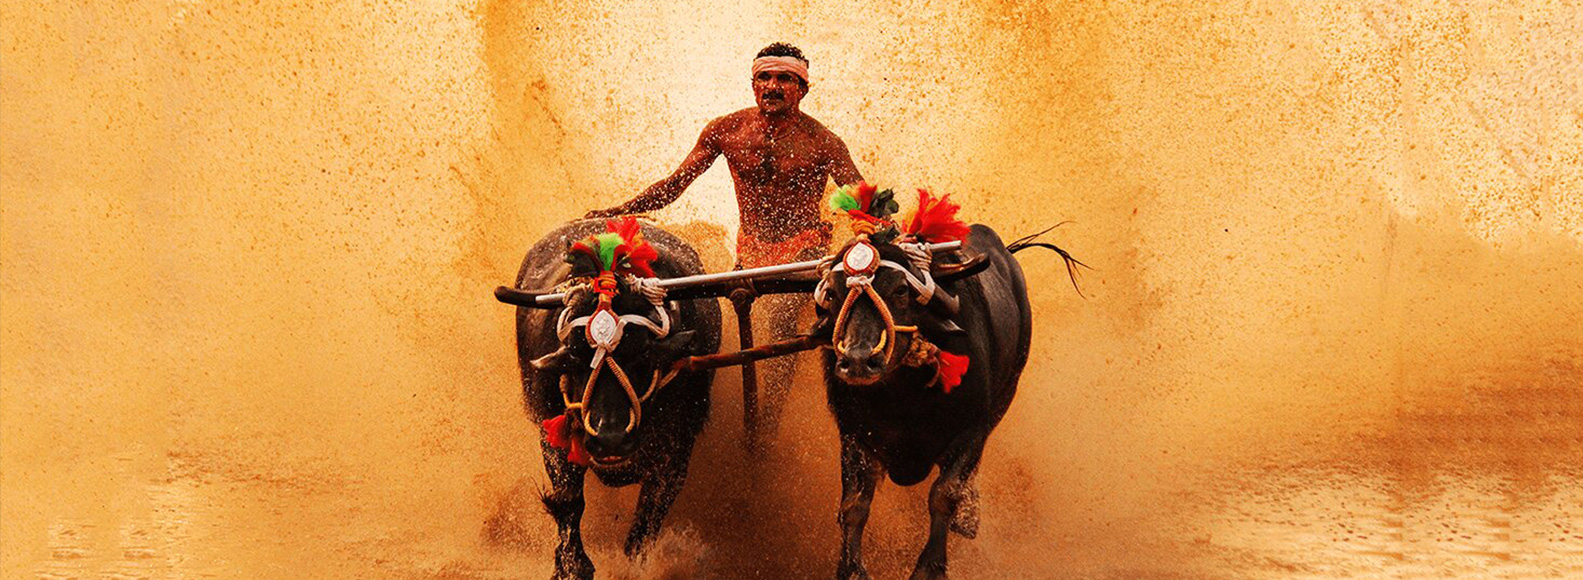 kambala annual buffalow race festival karnataka